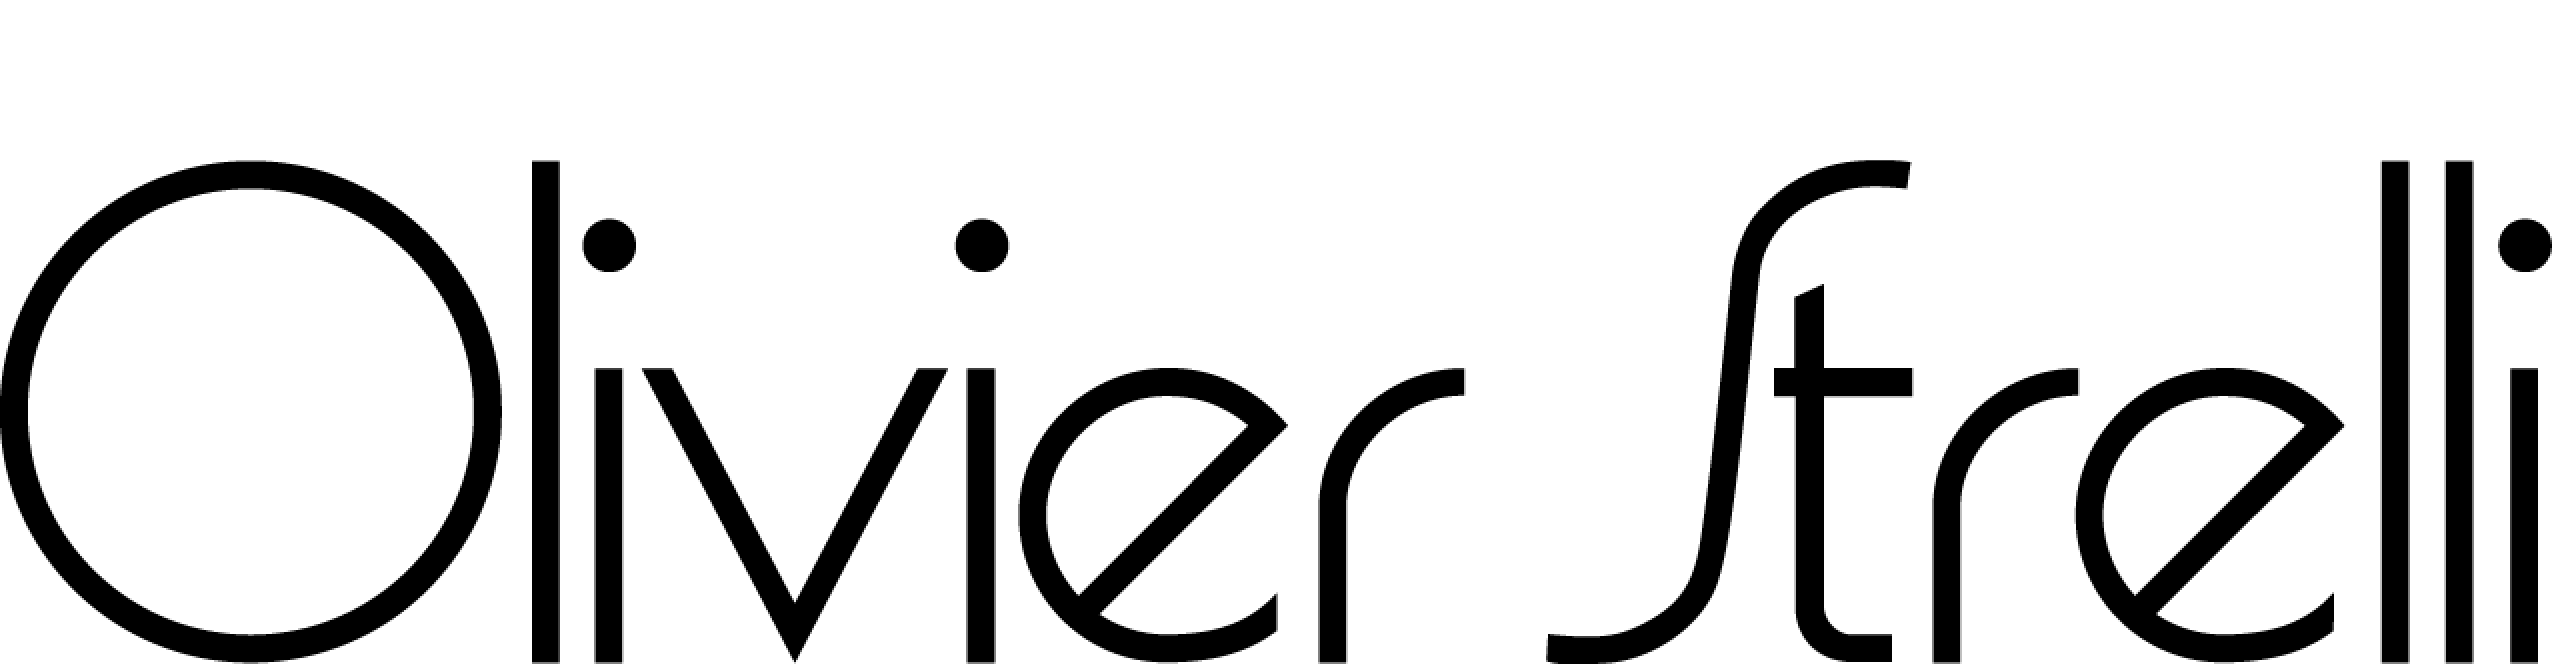 Logo Olivier Strelli